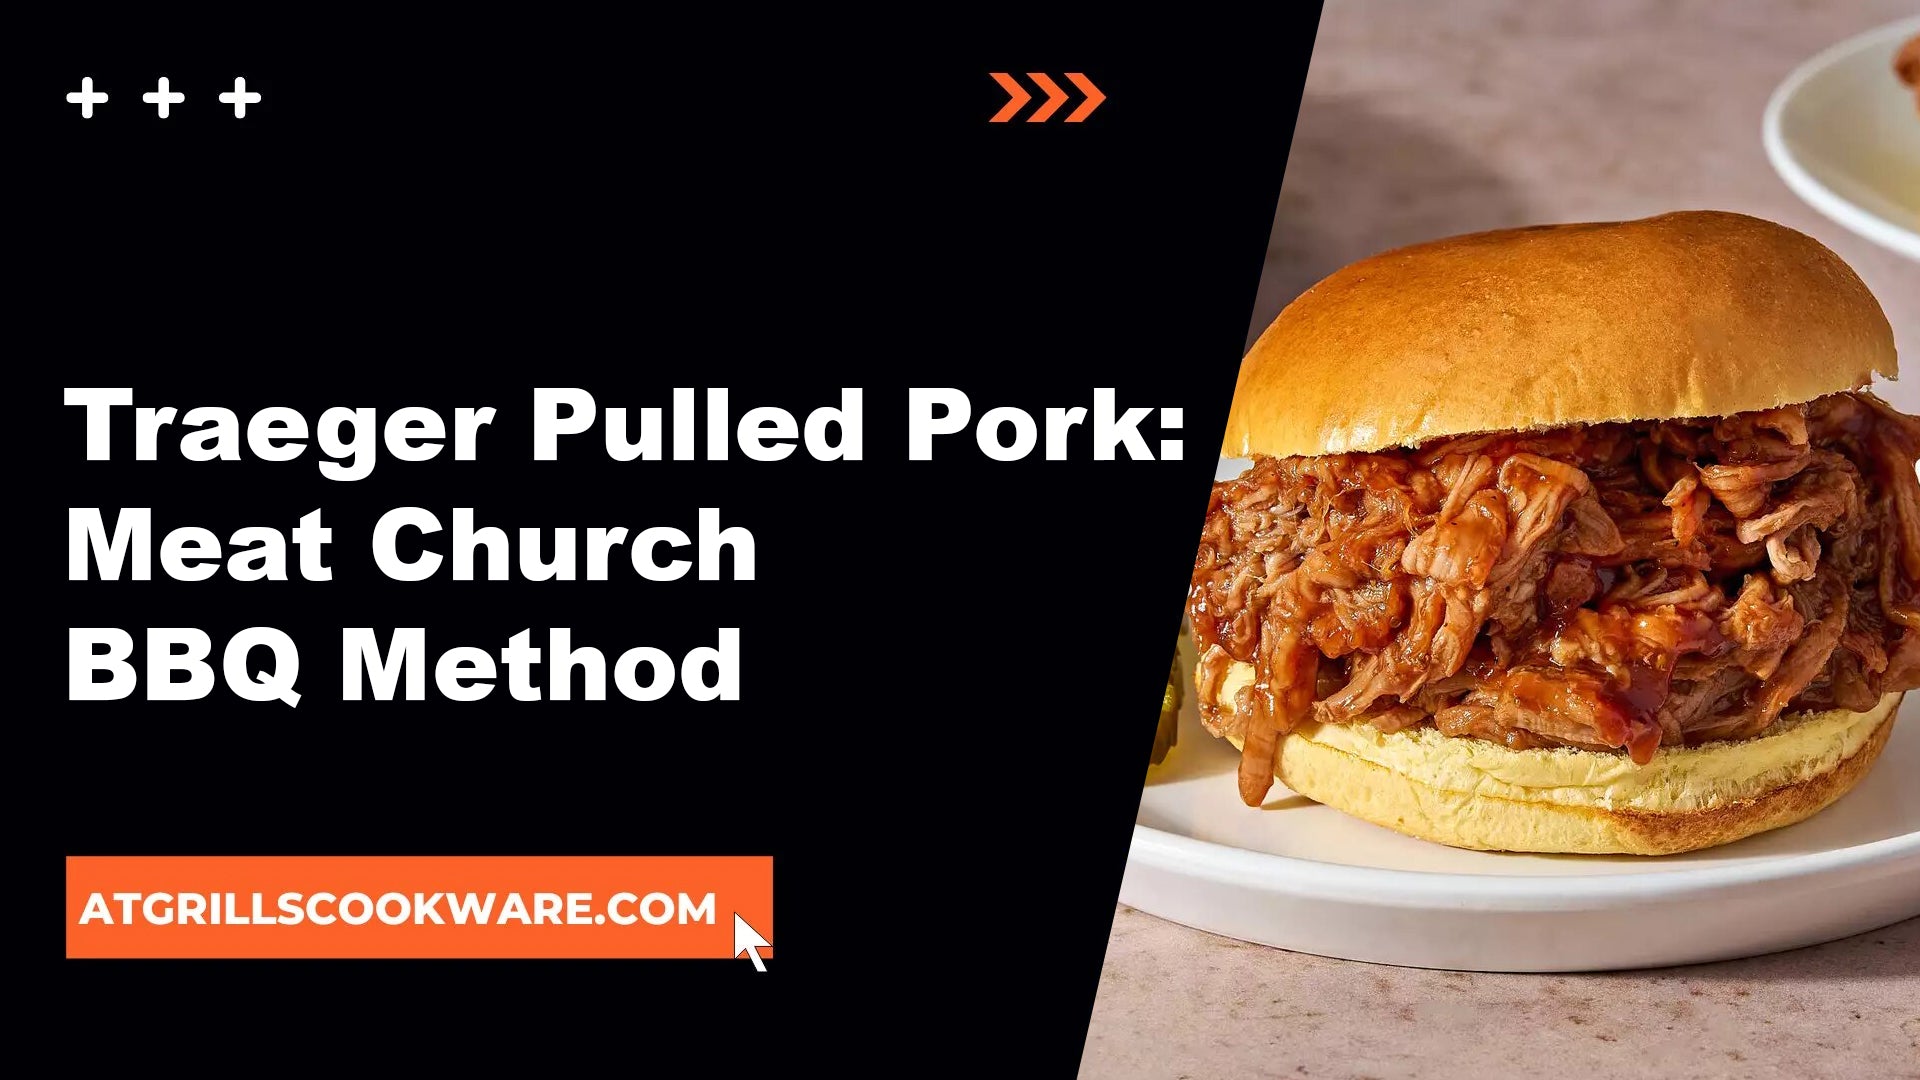 Traeger Pulled Pork: Meat Church BBQ Method